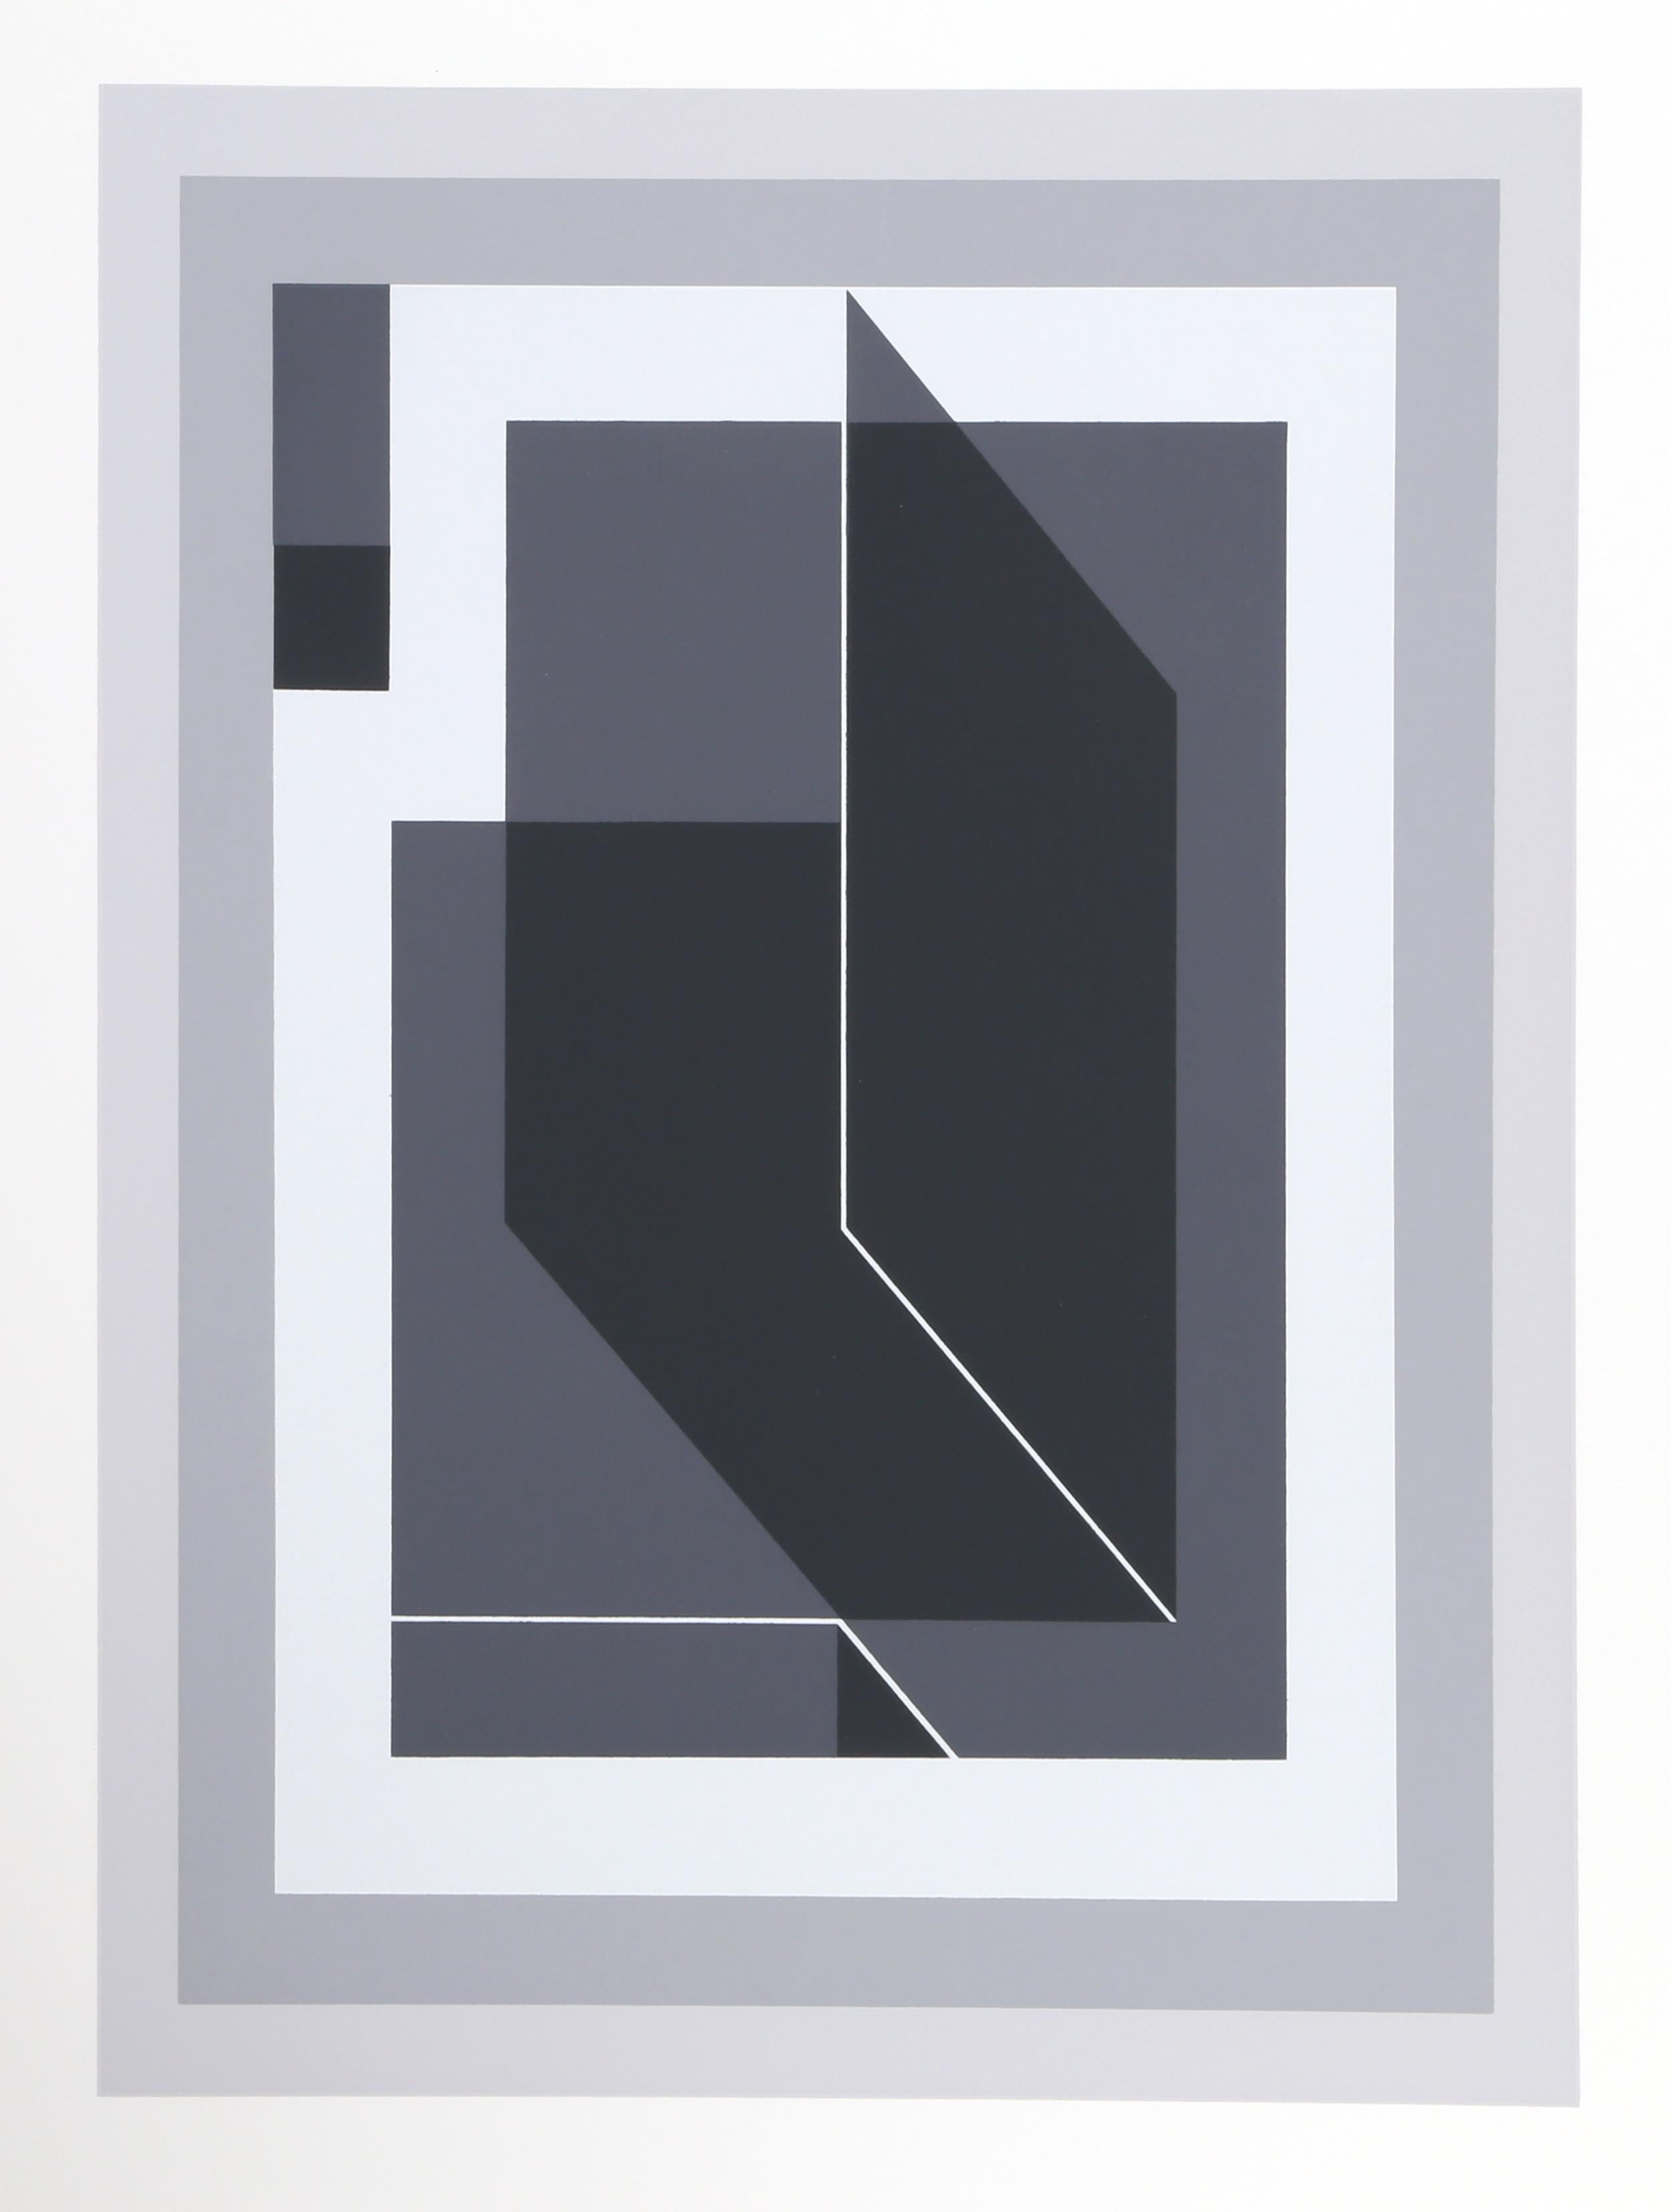 Bent Black - P1, F25, I2 - Print by Josef Albers